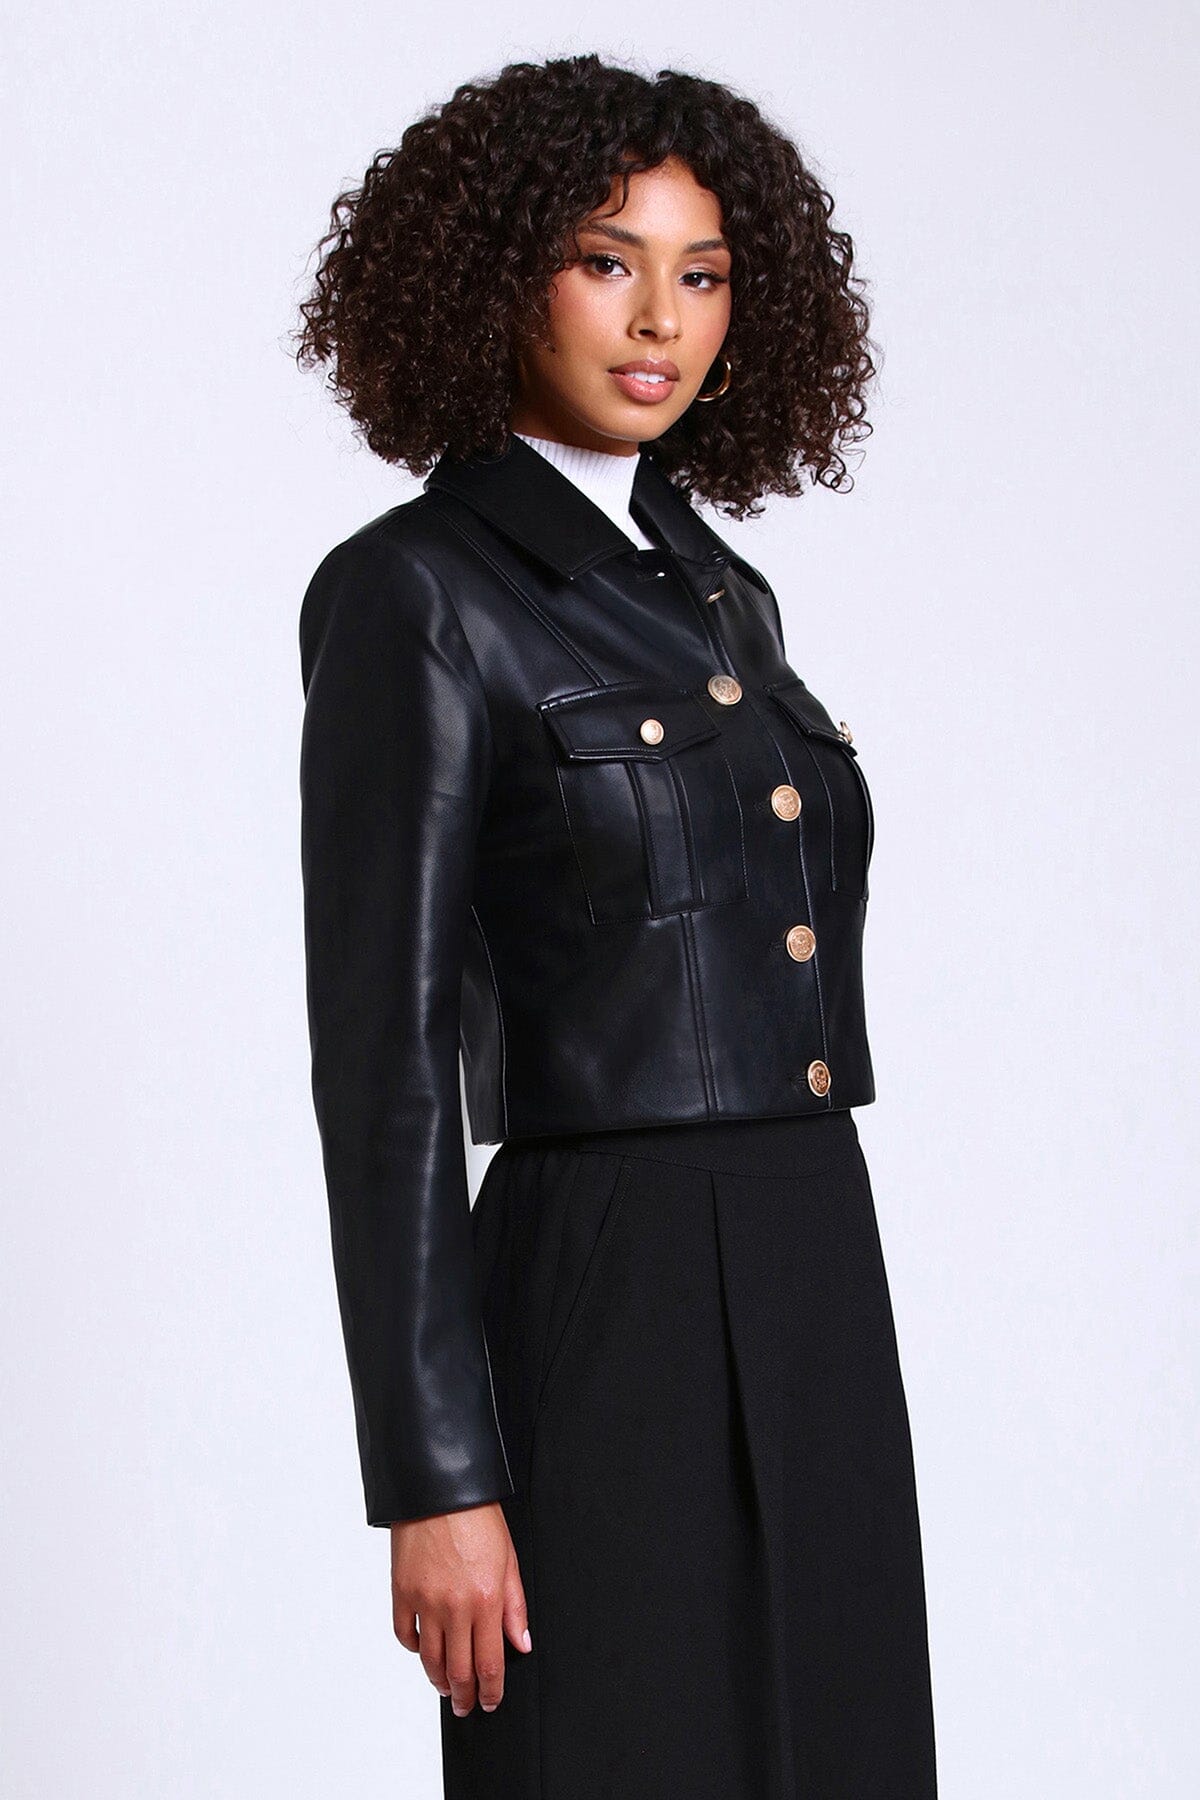 Black faux leather military crop jacket coat figure flattering cute jackets outerwear for women